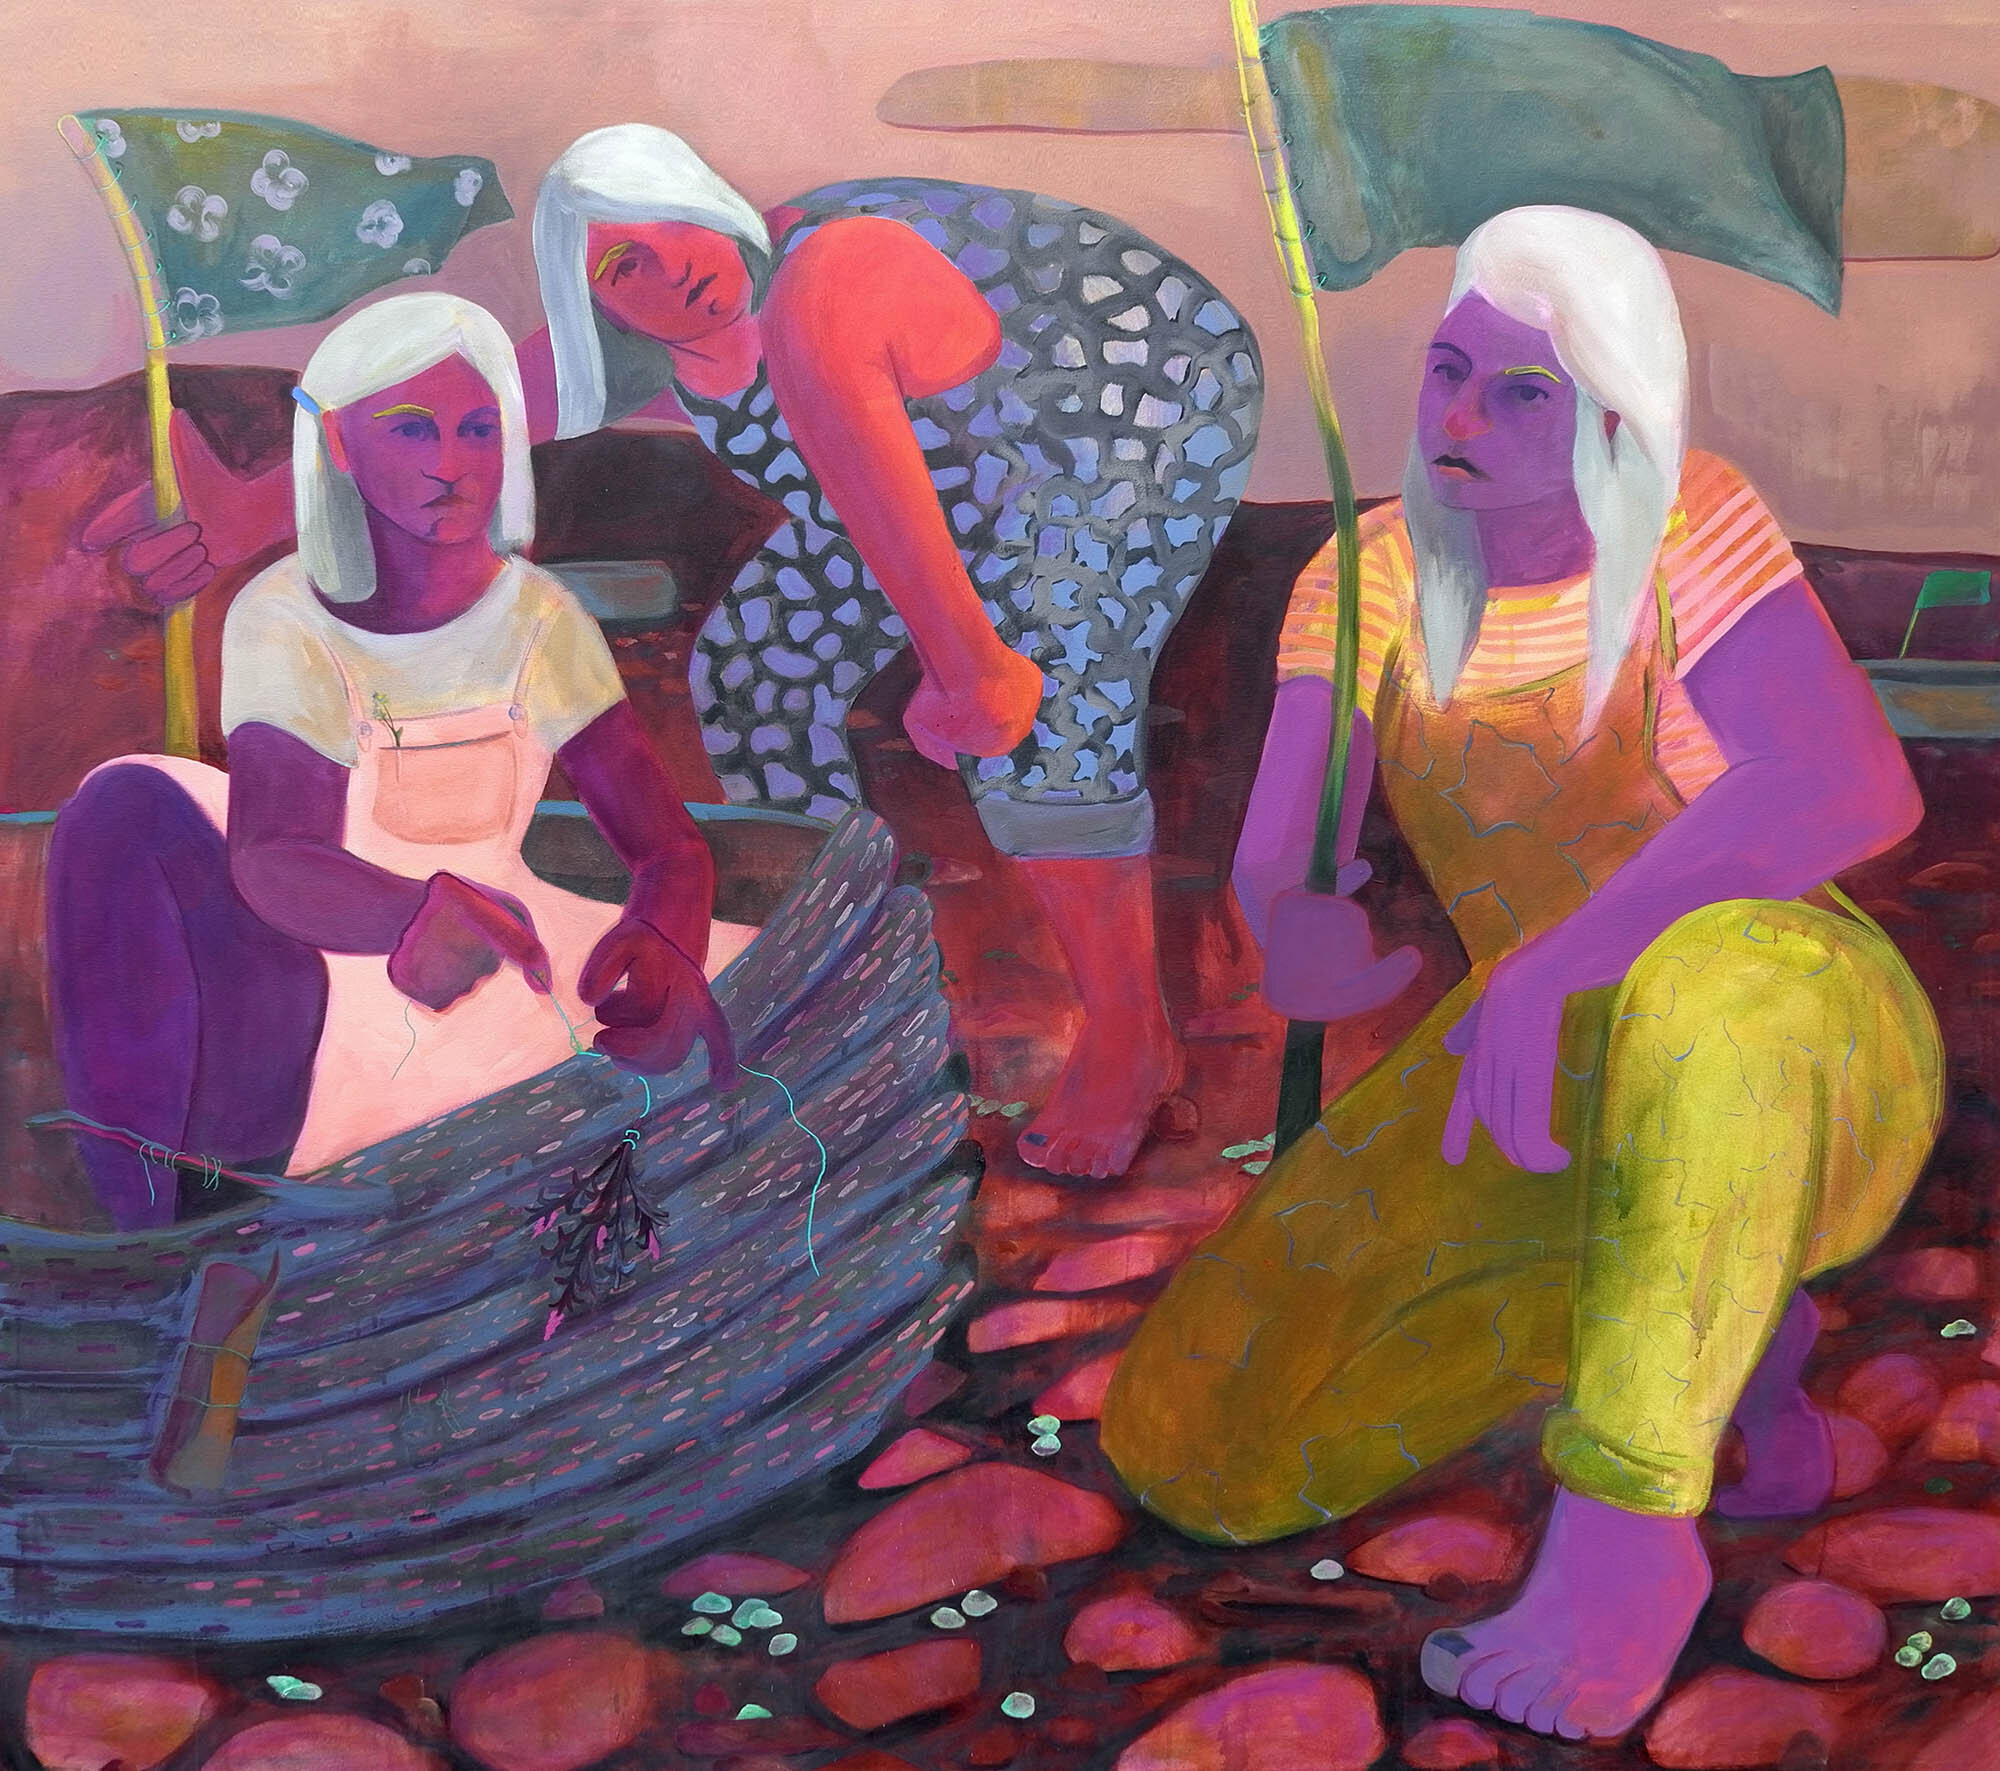   Genevieve Cohn, Women Like You Build Bowers, 2018, Acrylic on Canvas, 68"x76"  